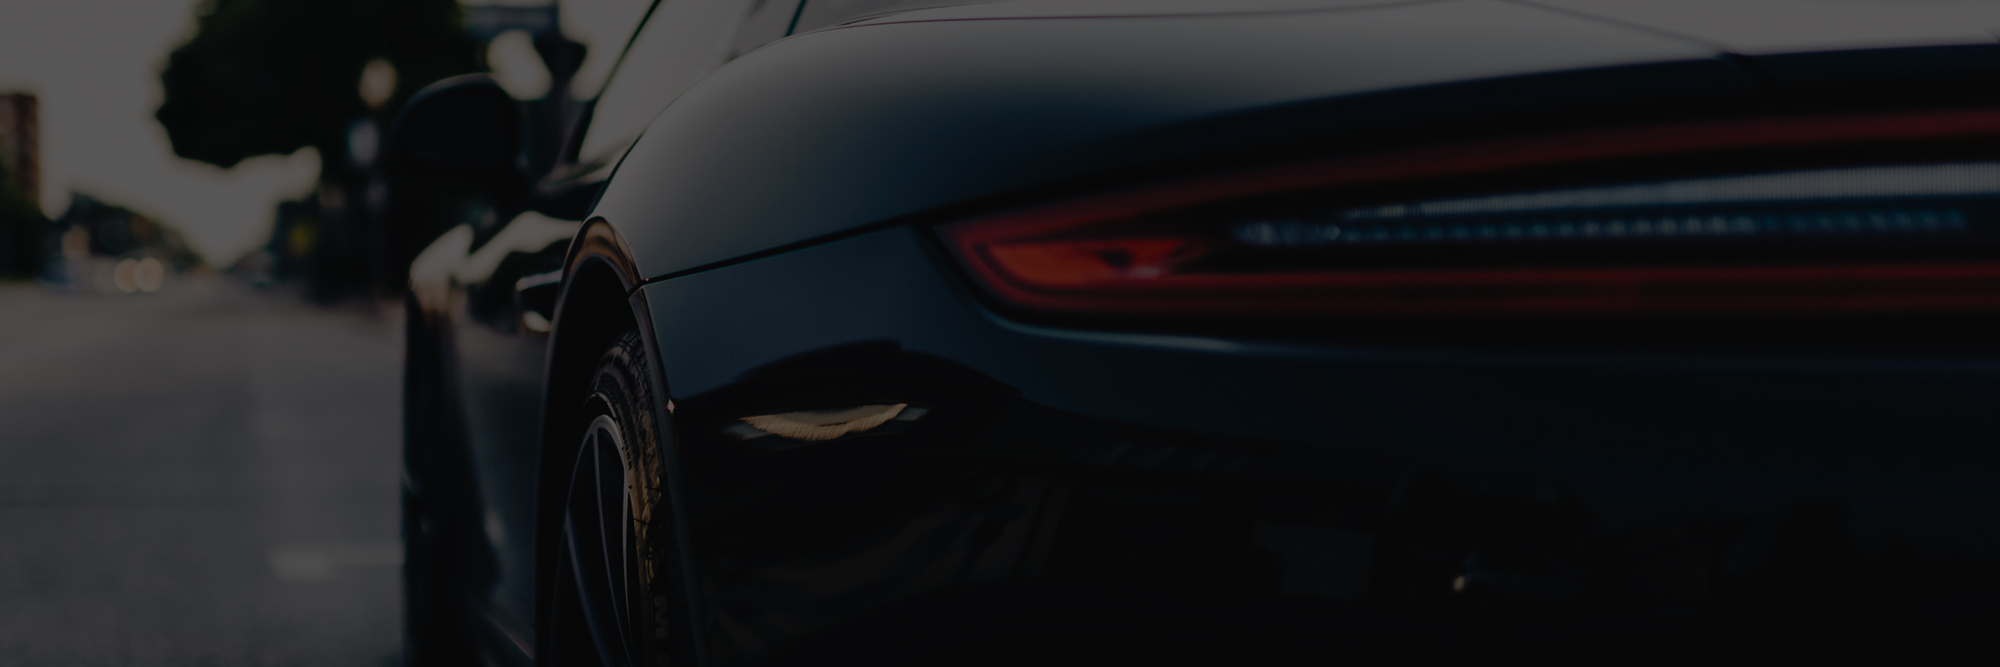 close up of black luxury car